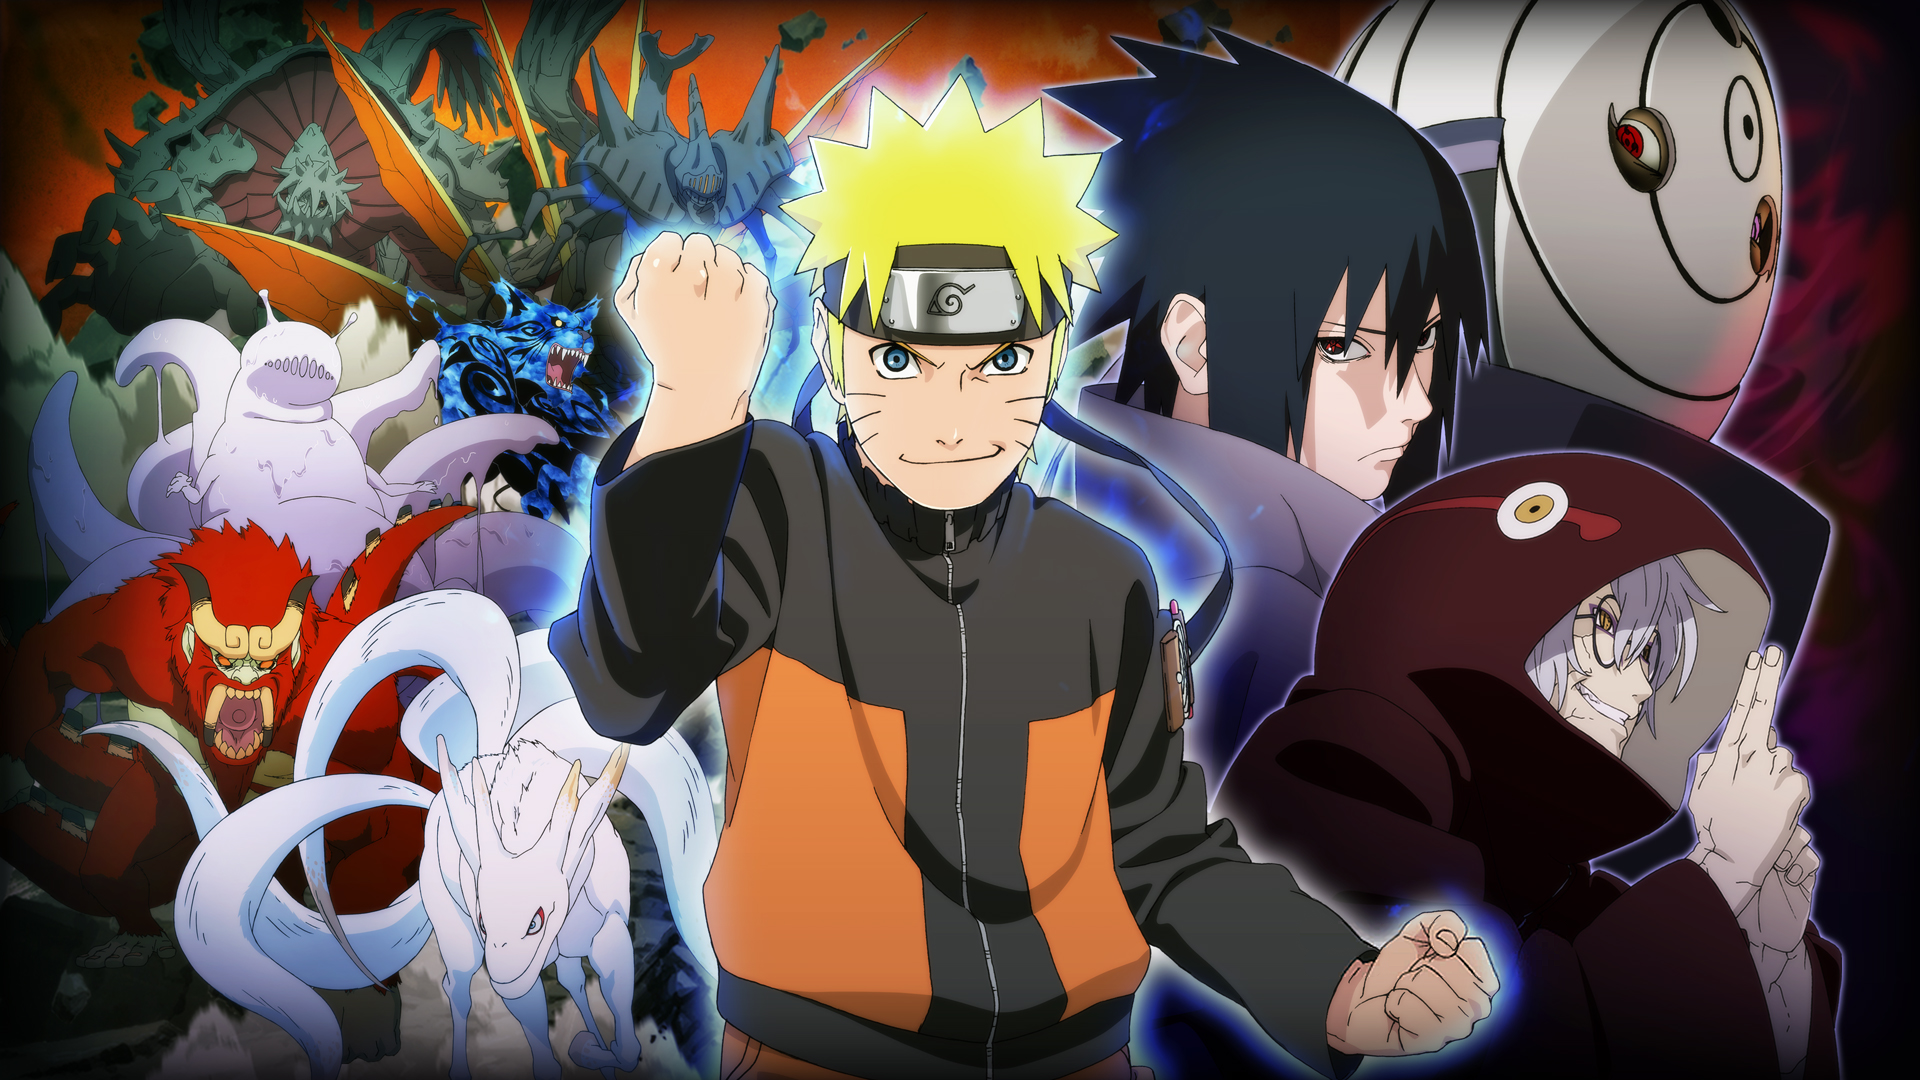 Naruto Shippuden: Ultimate Ninja Storm 3 Full Burst HD